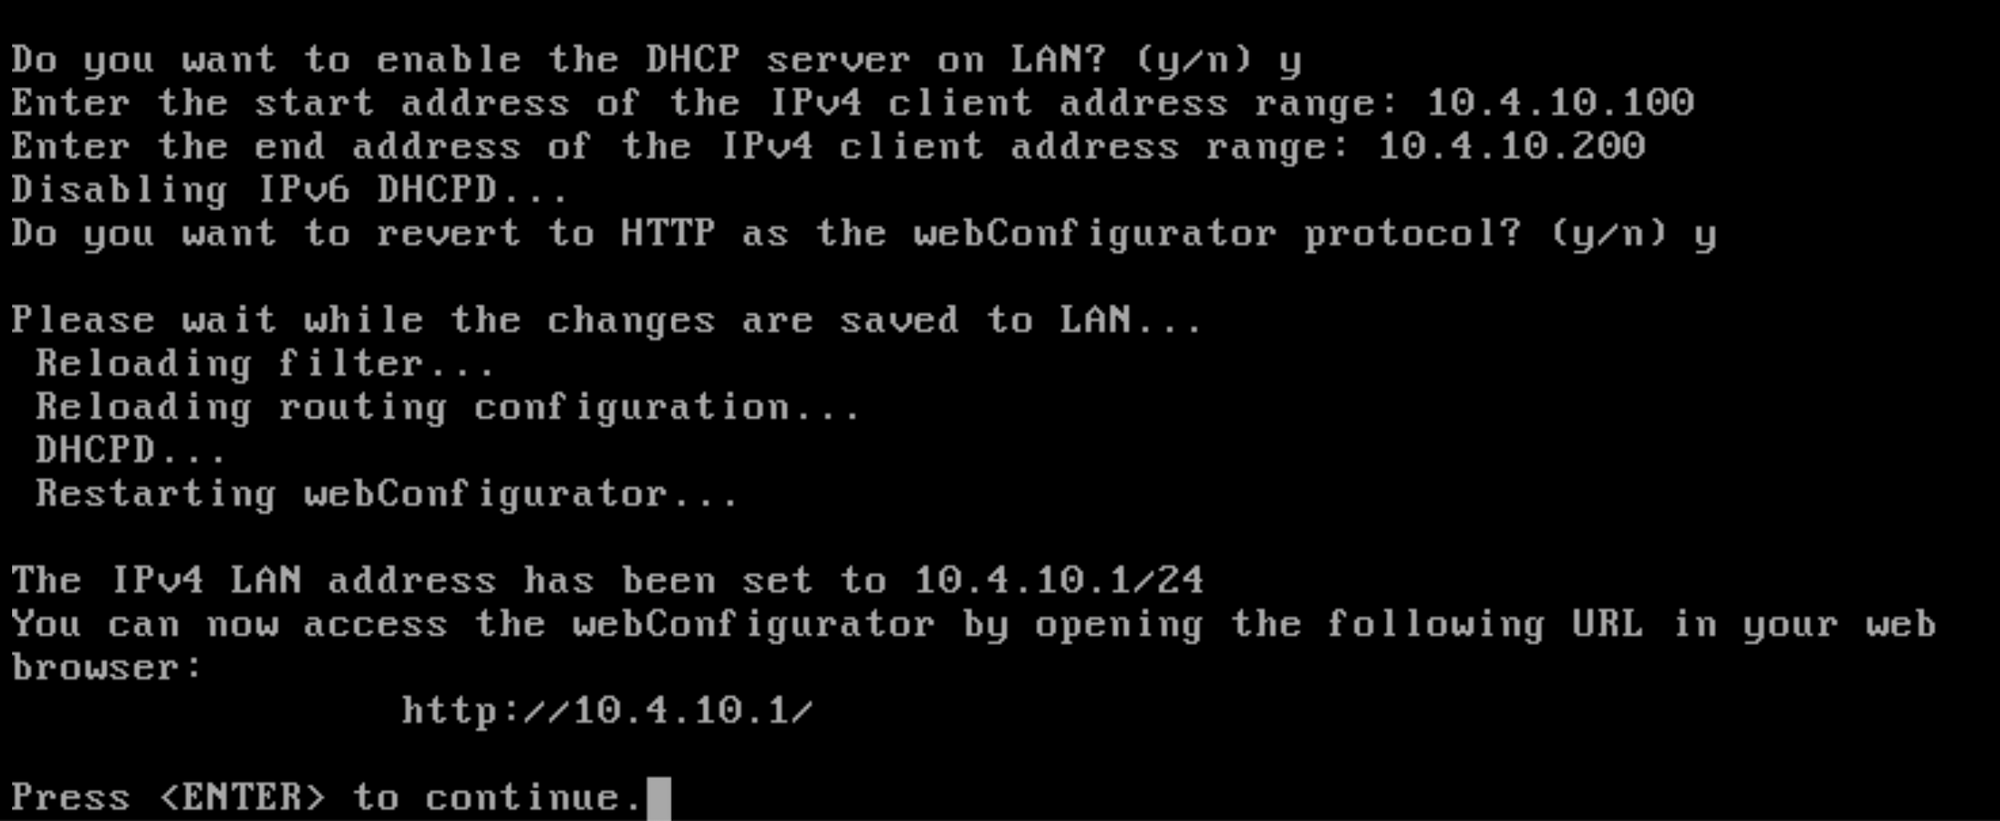 QNAP jako zaawansowany router - pfSense na QNAP - krok po kroku